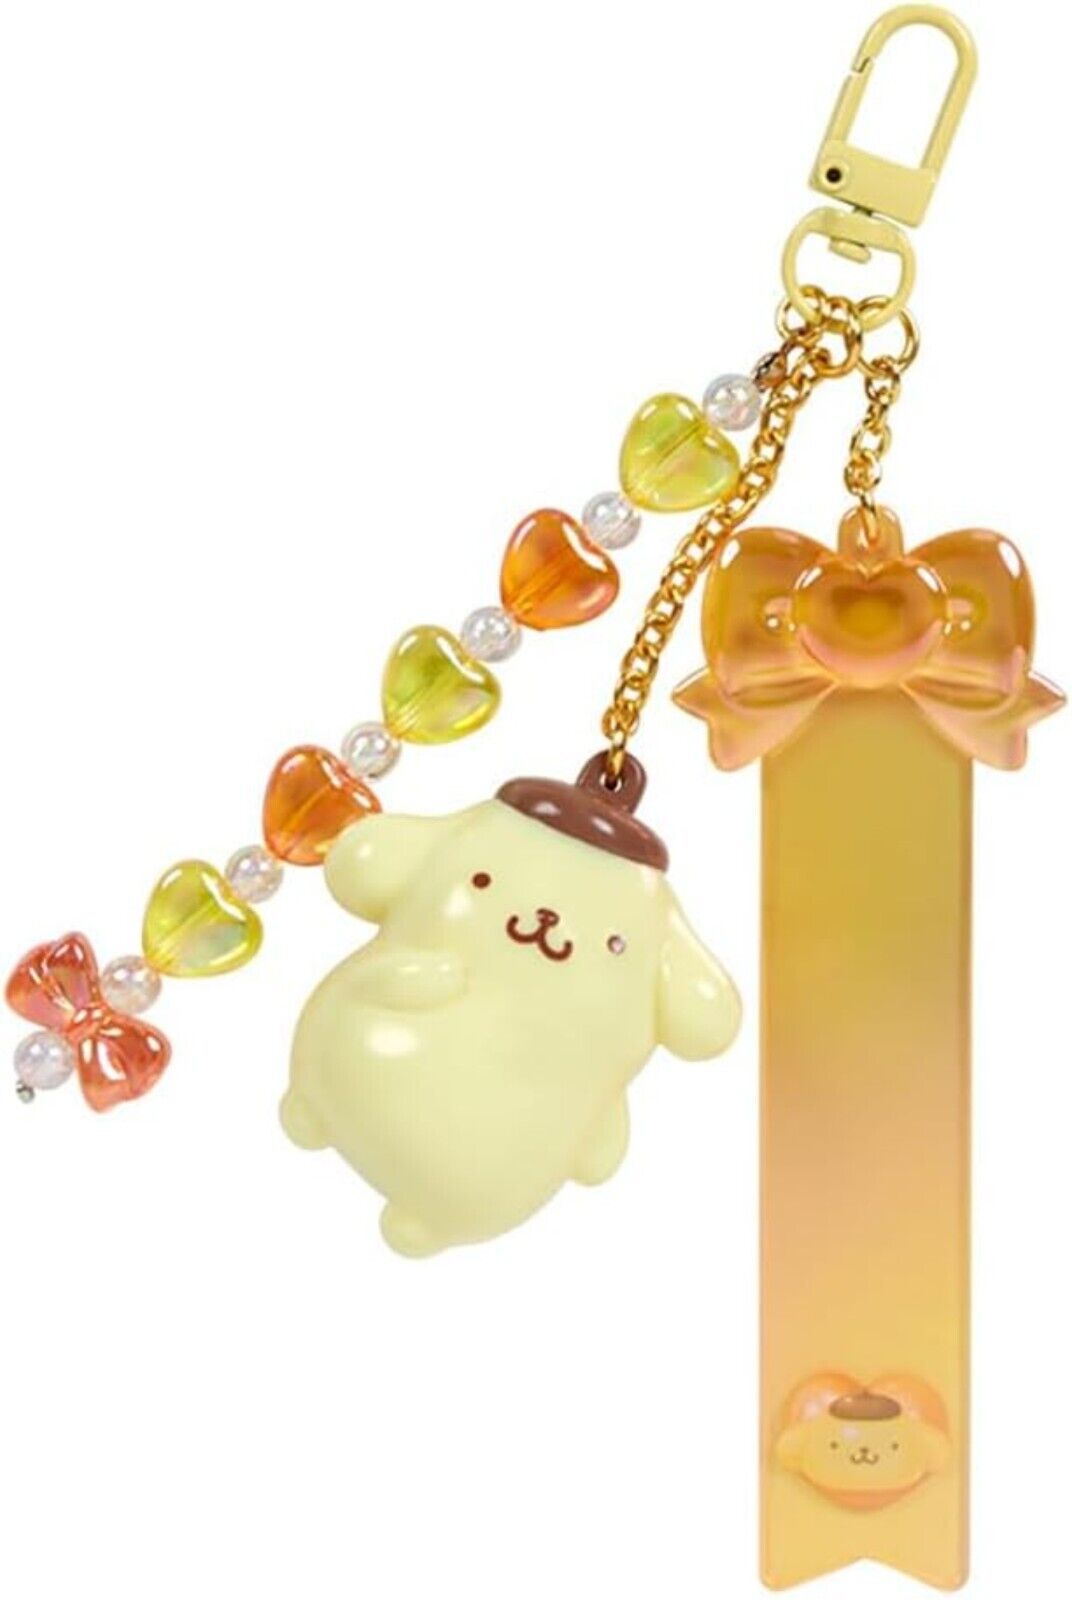 Sanrio Character Pompompurin Custom Keychain (Clear & Plump 3D) Mascot Charm New